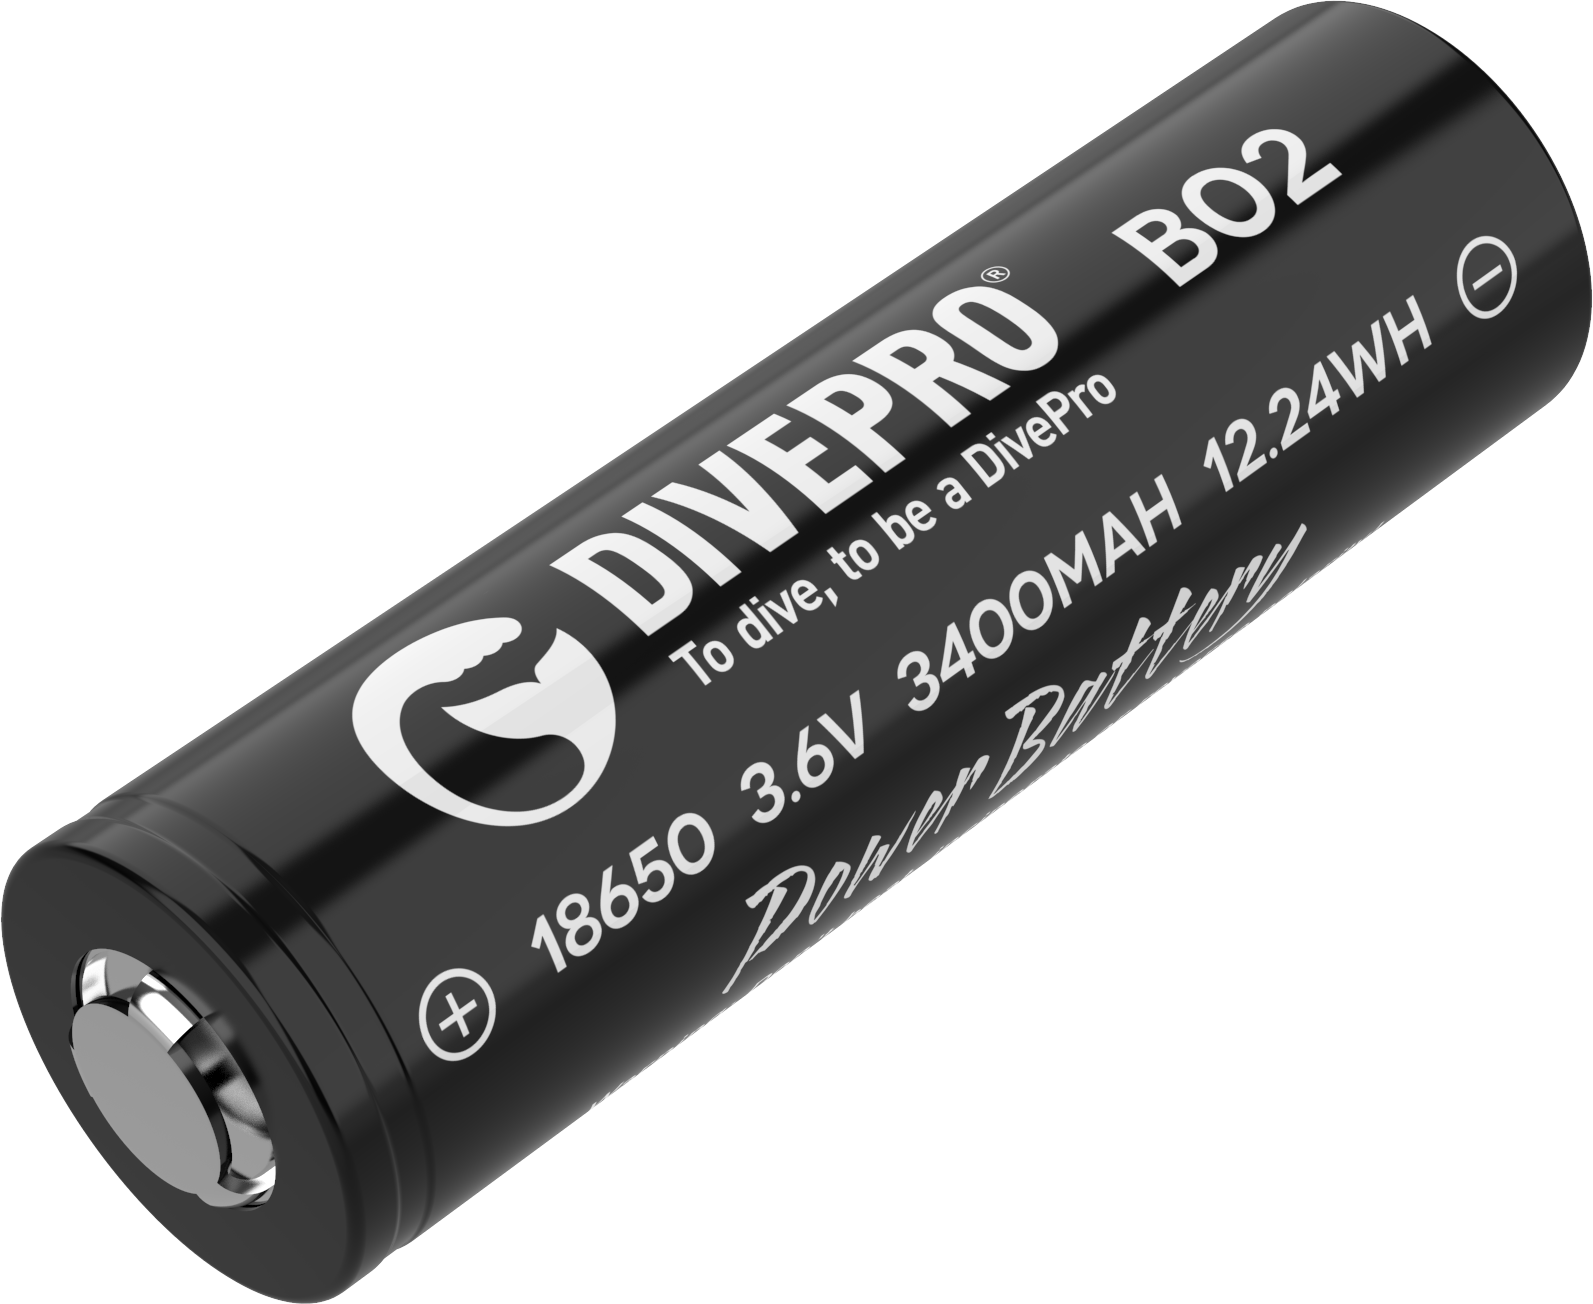 DivePro B02 Battery